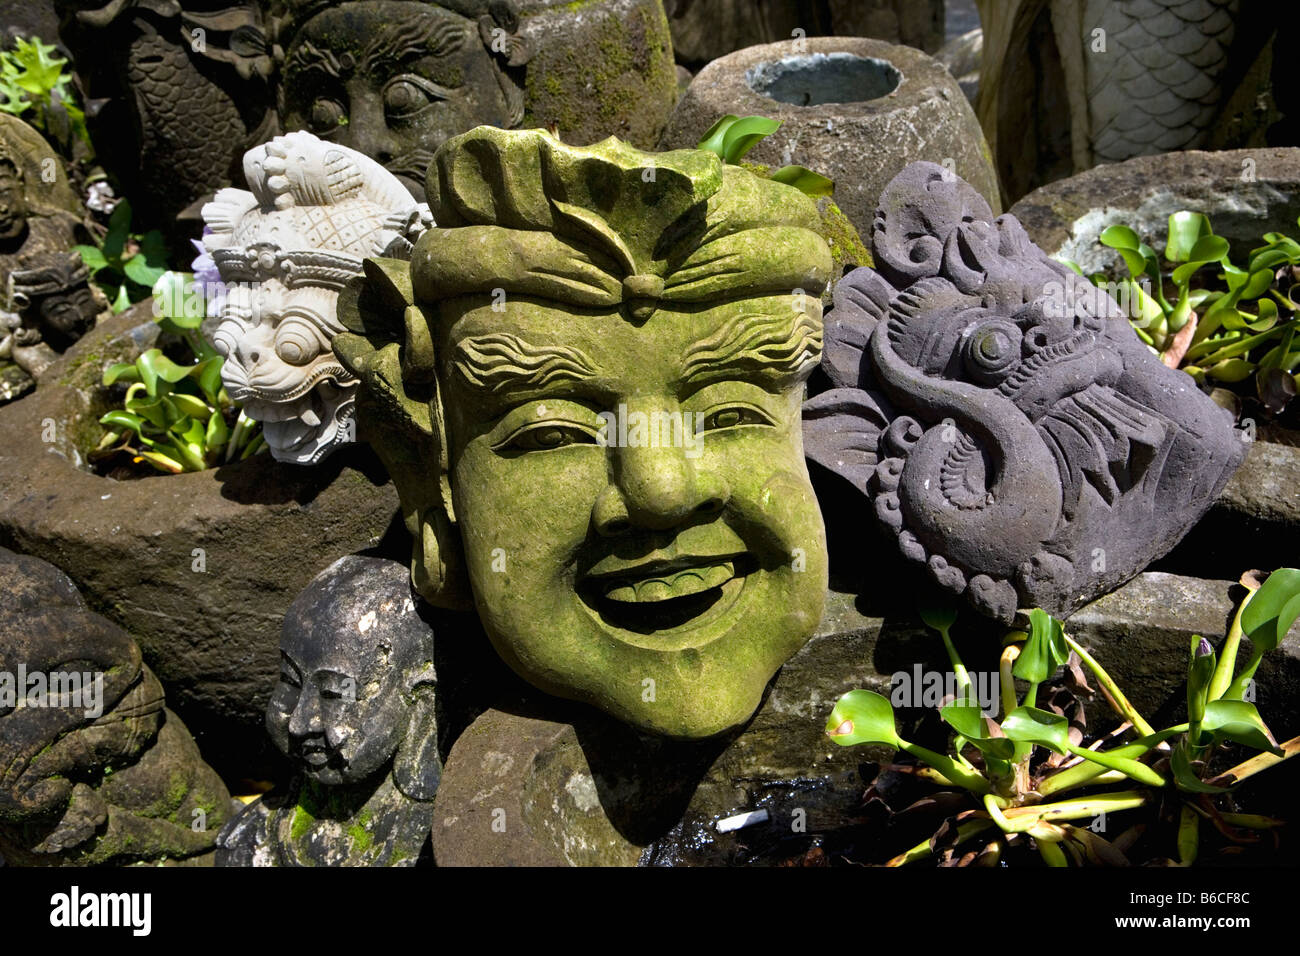 Indonesia, Ubud, Bali, Garden statue Stock Photo - Alamy